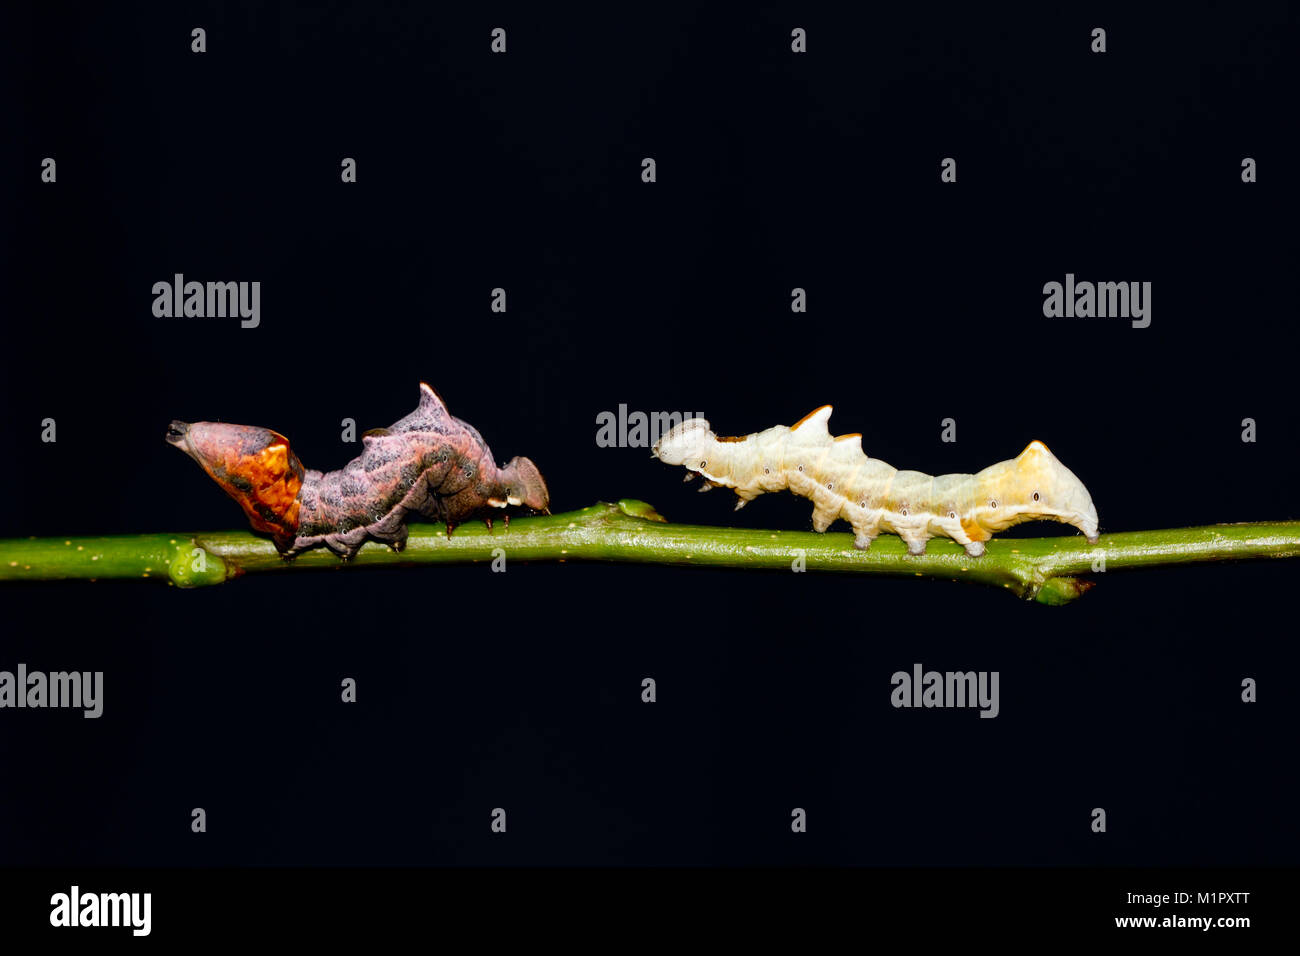 Pebble prominent moth larva Stock Photo